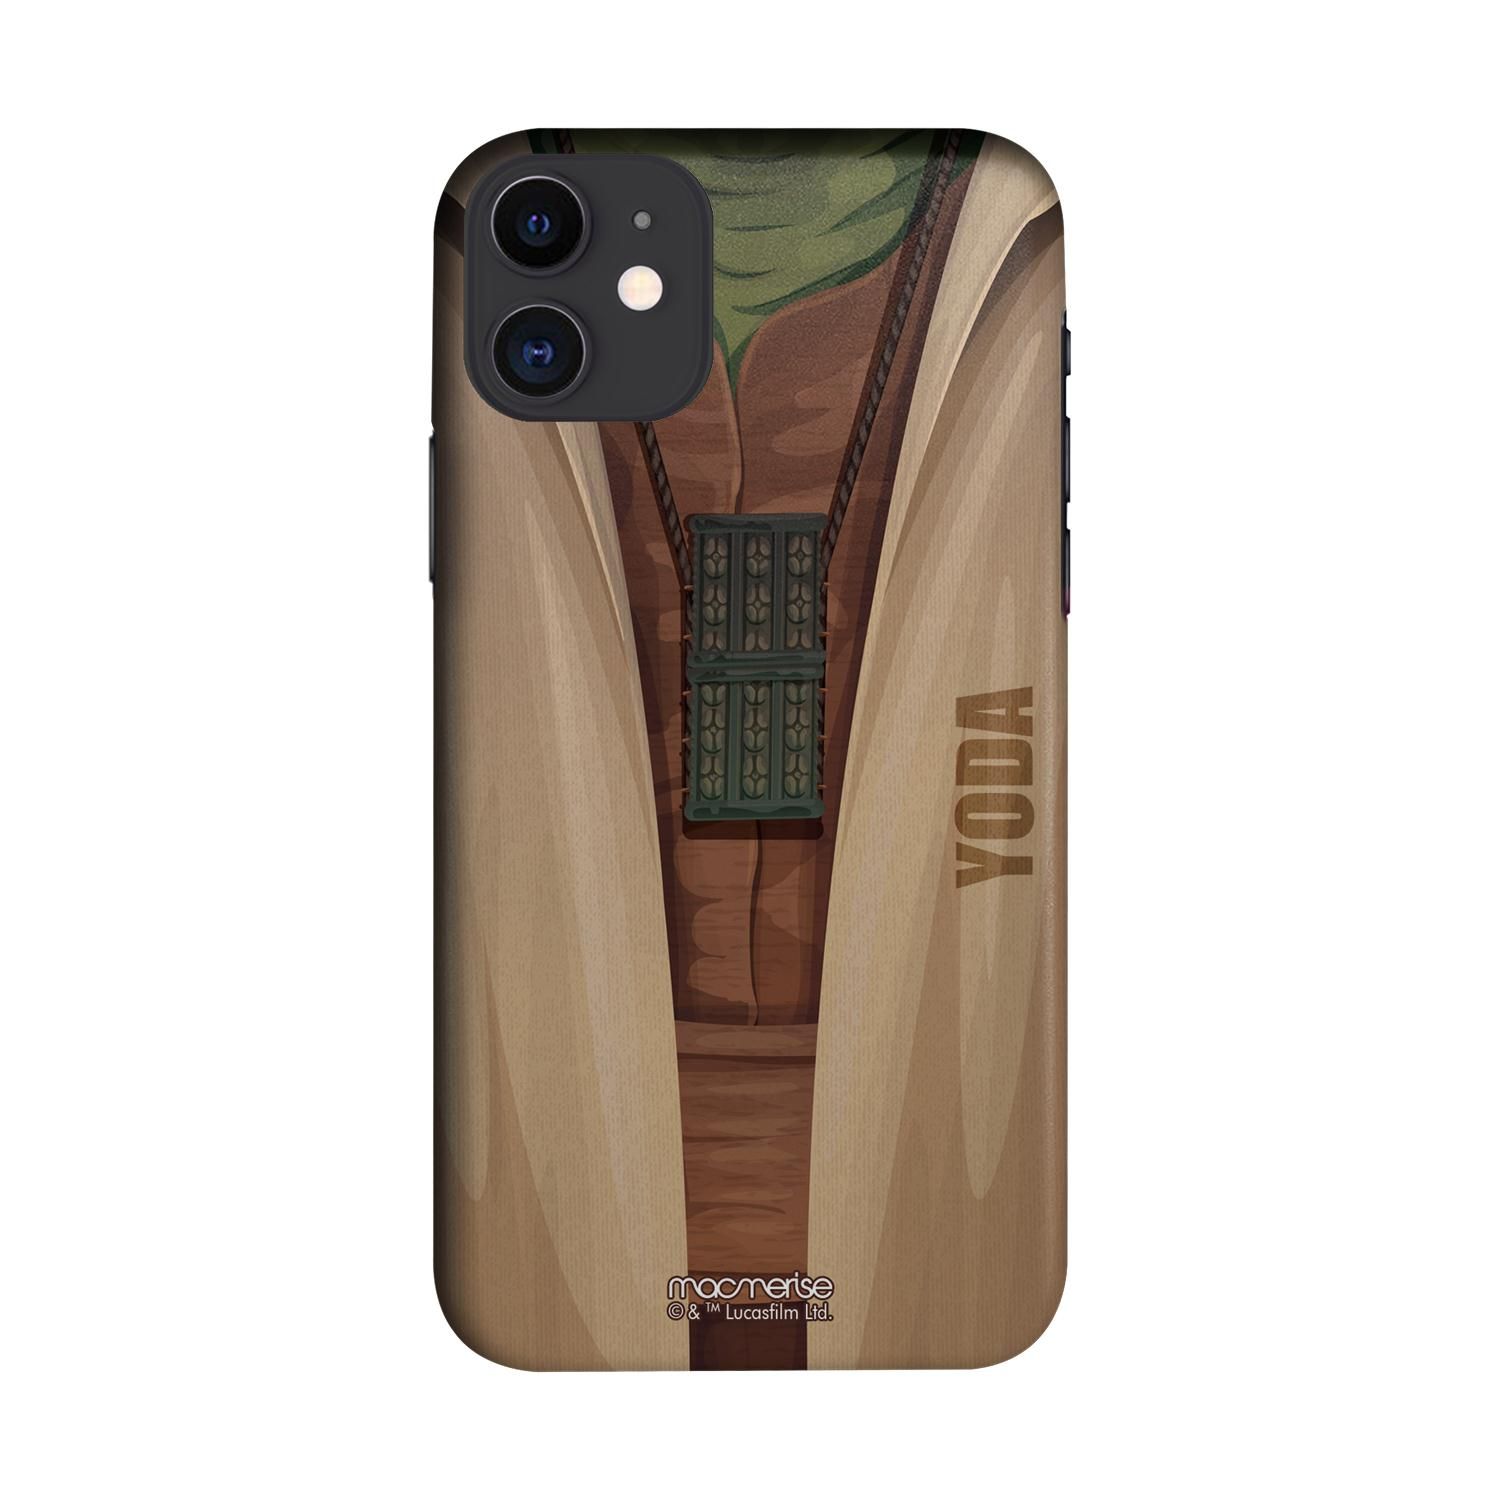 Buy Attire Yoda - Sleek Phone Case for iPhone 11 Online